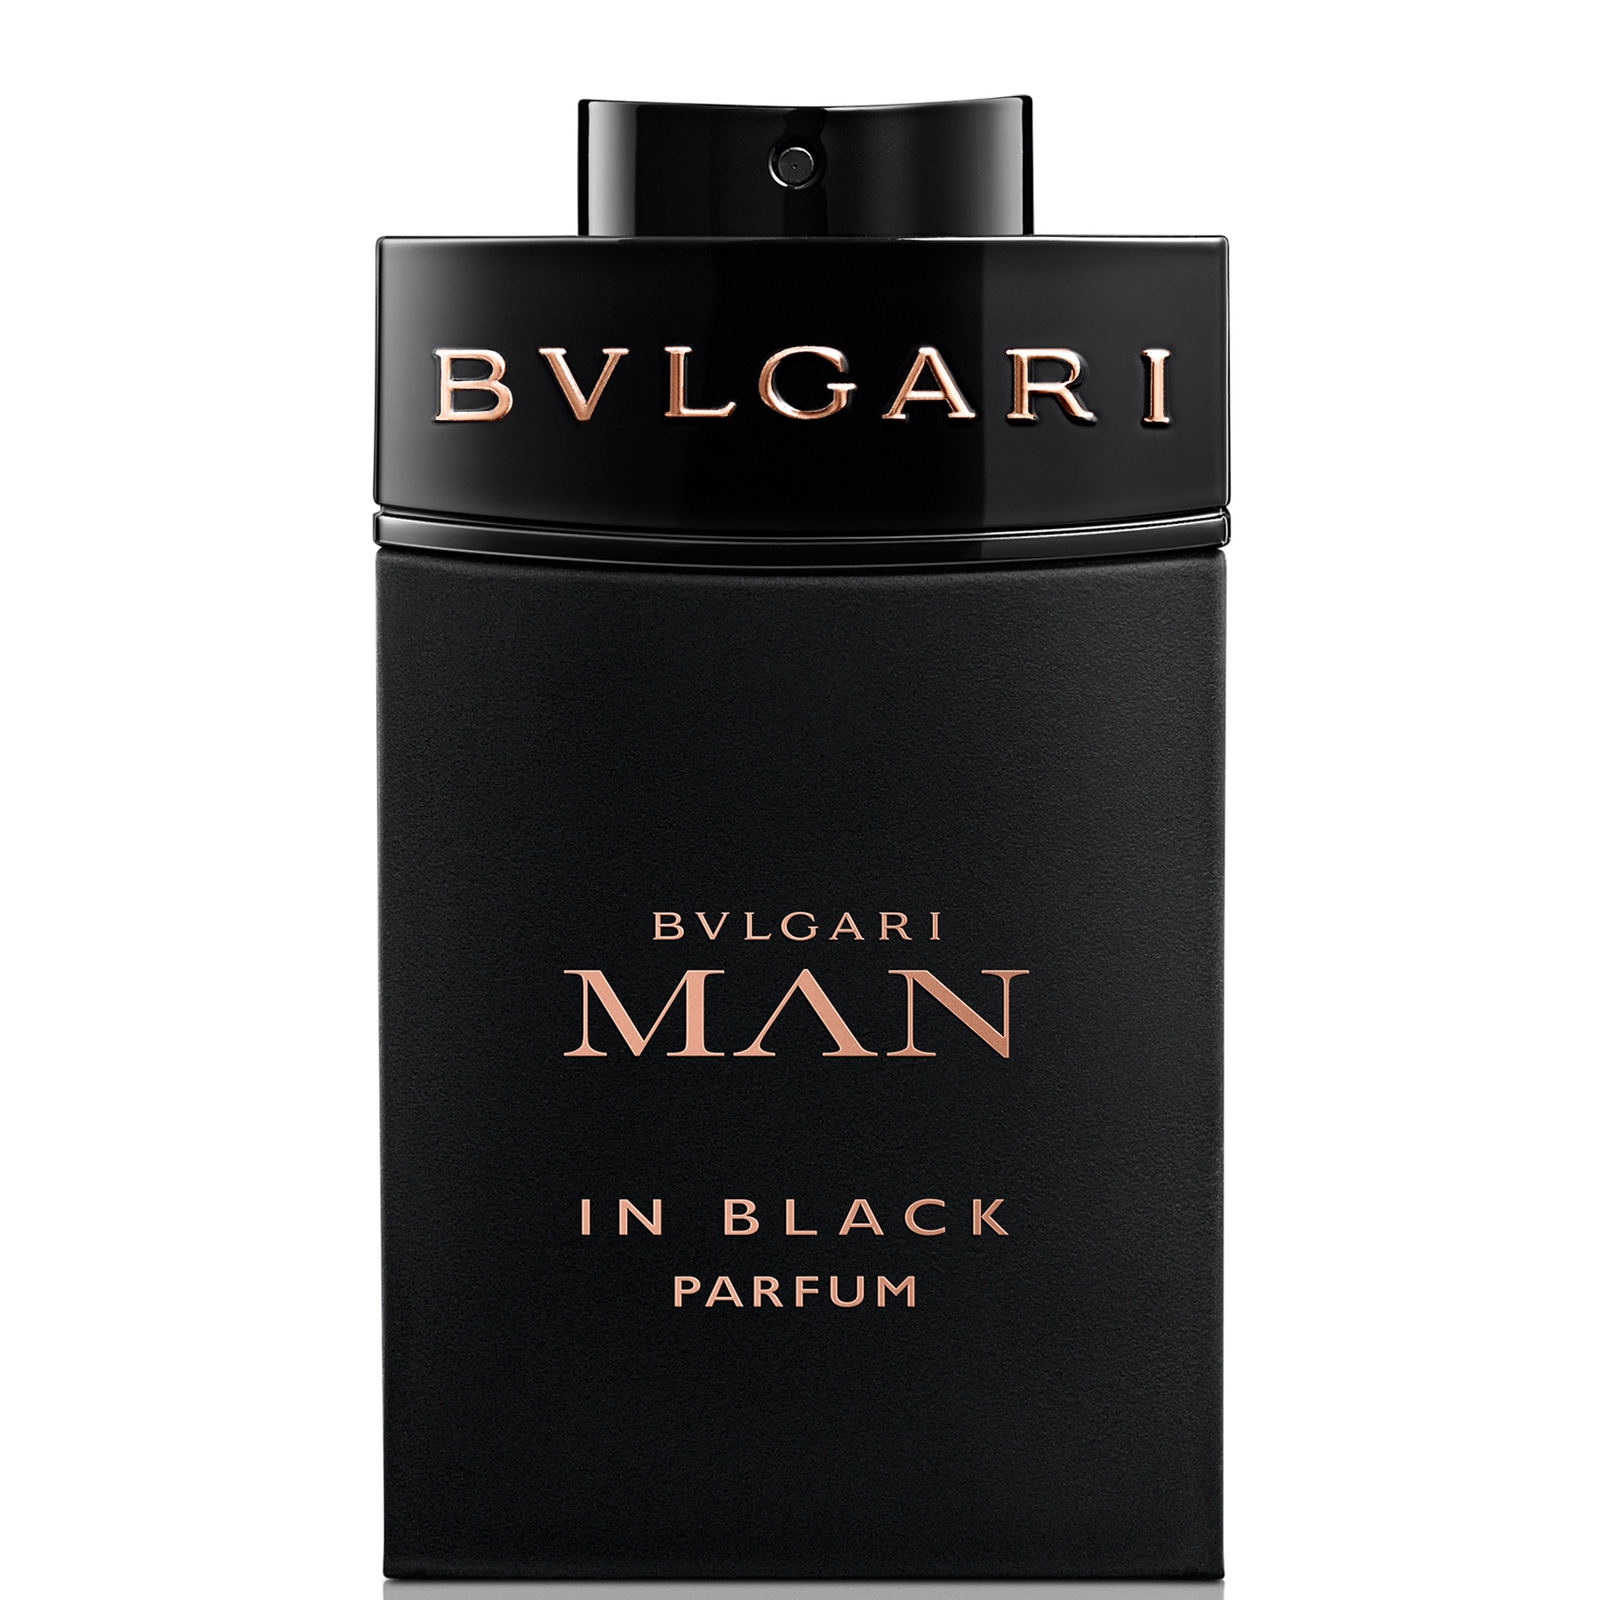 Photos - Women's Fragrance Bvlgari Man in Black Parfum 100ml 42153 